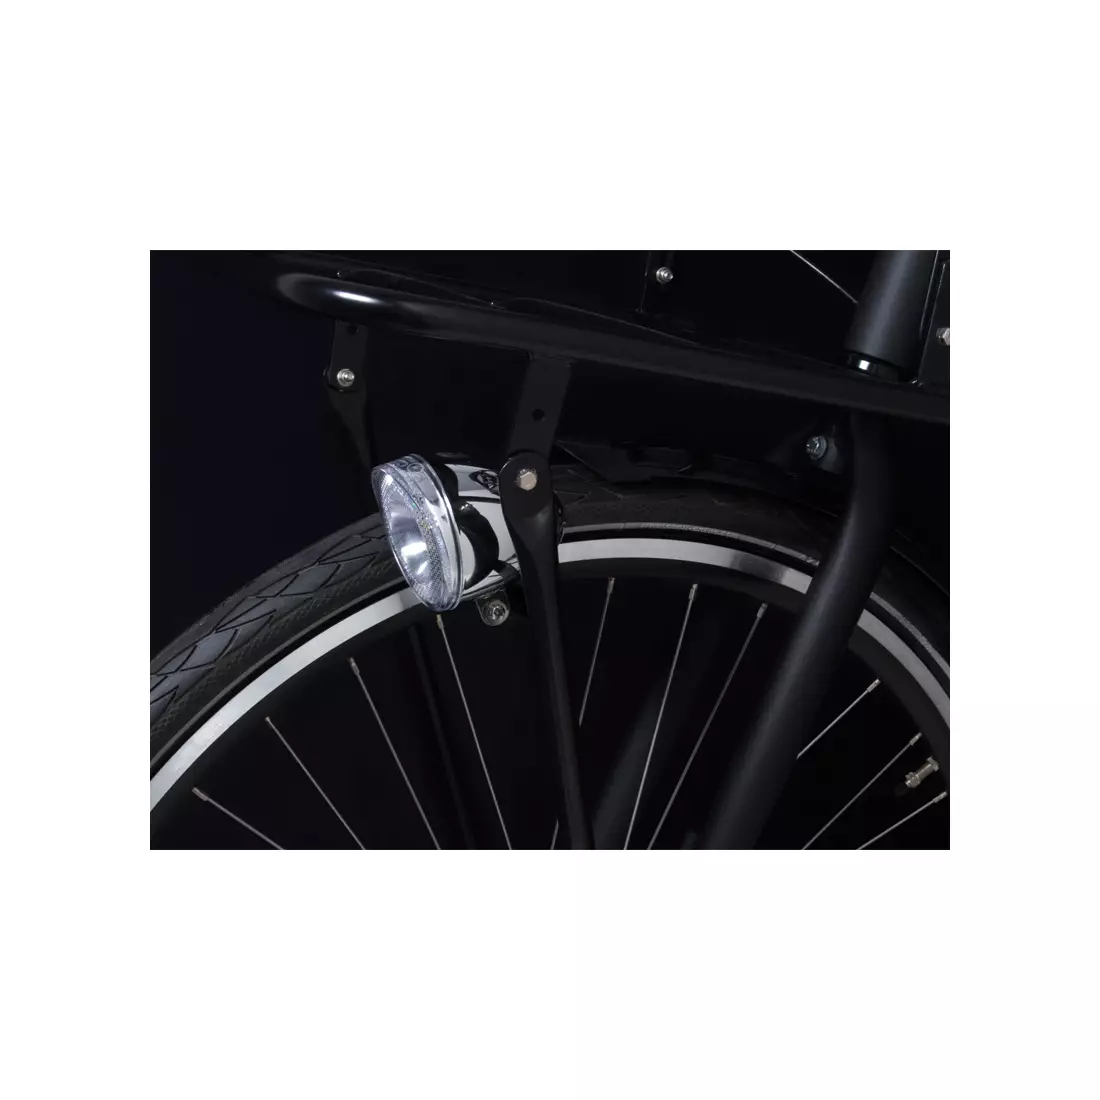 Predné svietidlo na bicykel SPANNINGA SWINGO XDO 10 luxov / 50 lúmenov pod dynamom chrom (NEW) SNG-H070309